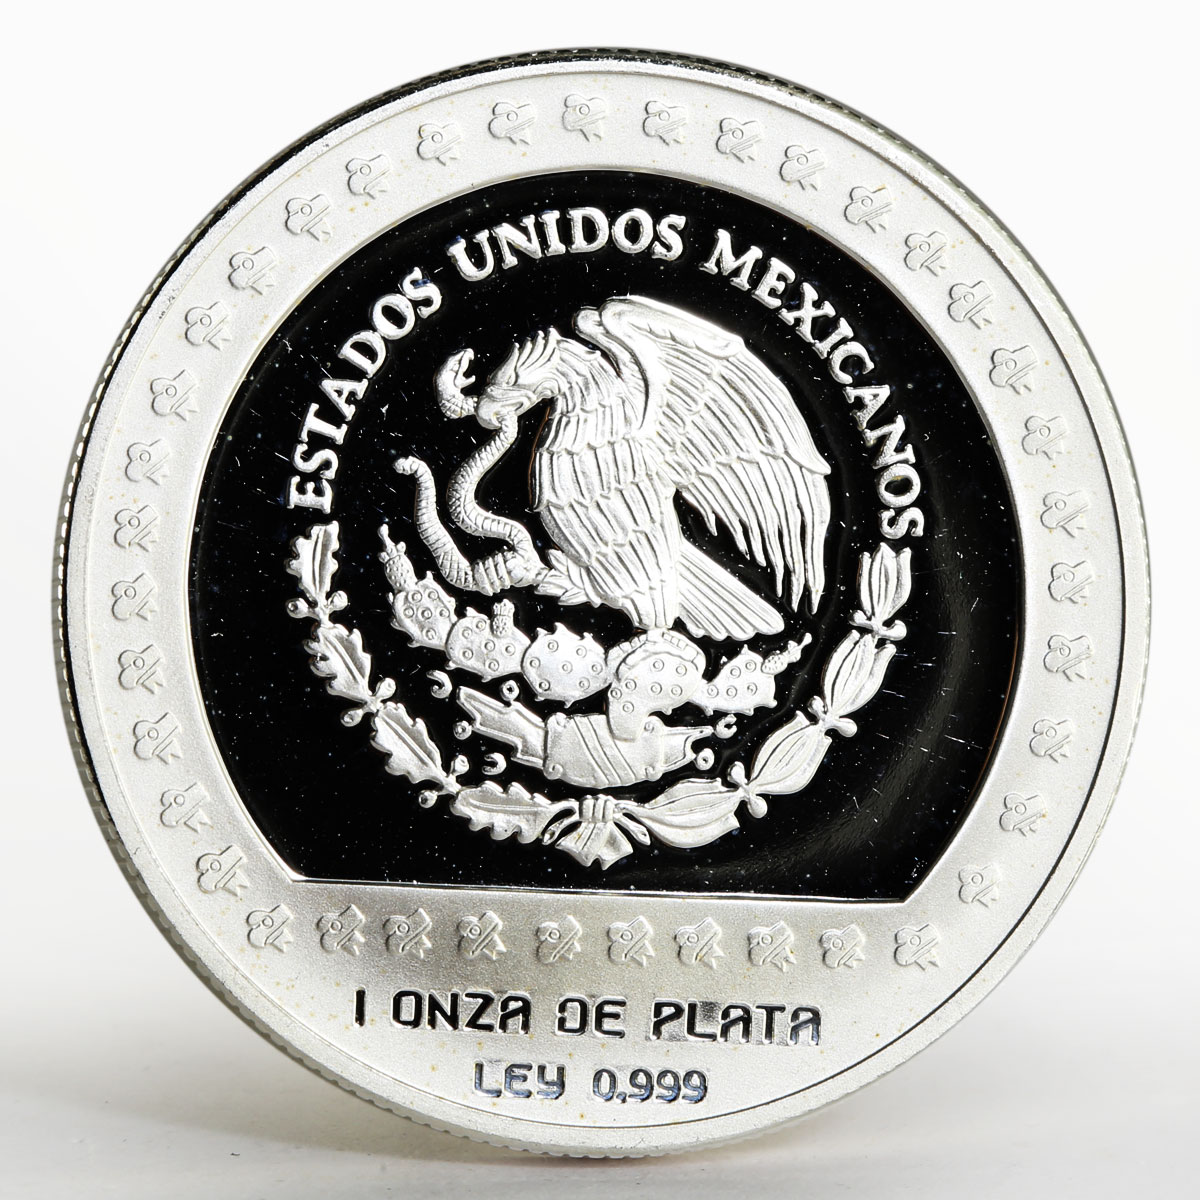 Mexico 100 pesos Seated Sculpture Xochipilli proof silver coin 1992